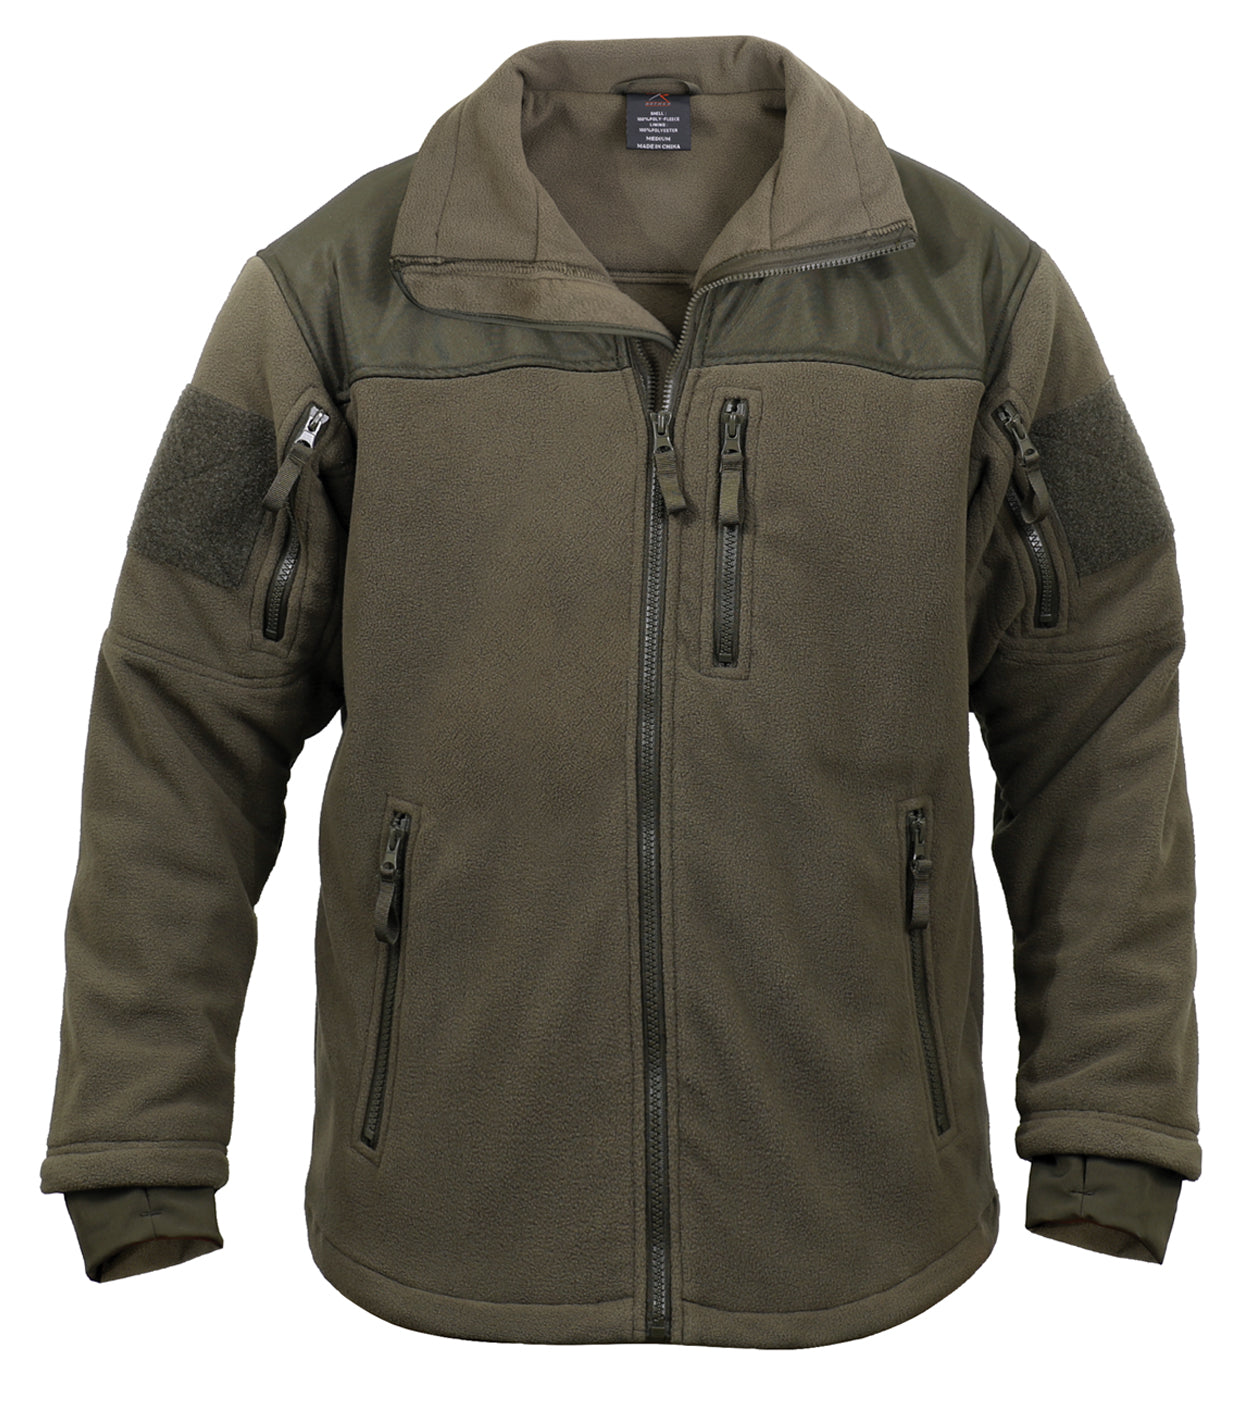 Milspec Spec Ops Tactical Fleece Jacket Gifts For Him MilTac Tactical Military Outdoor Gear Australia